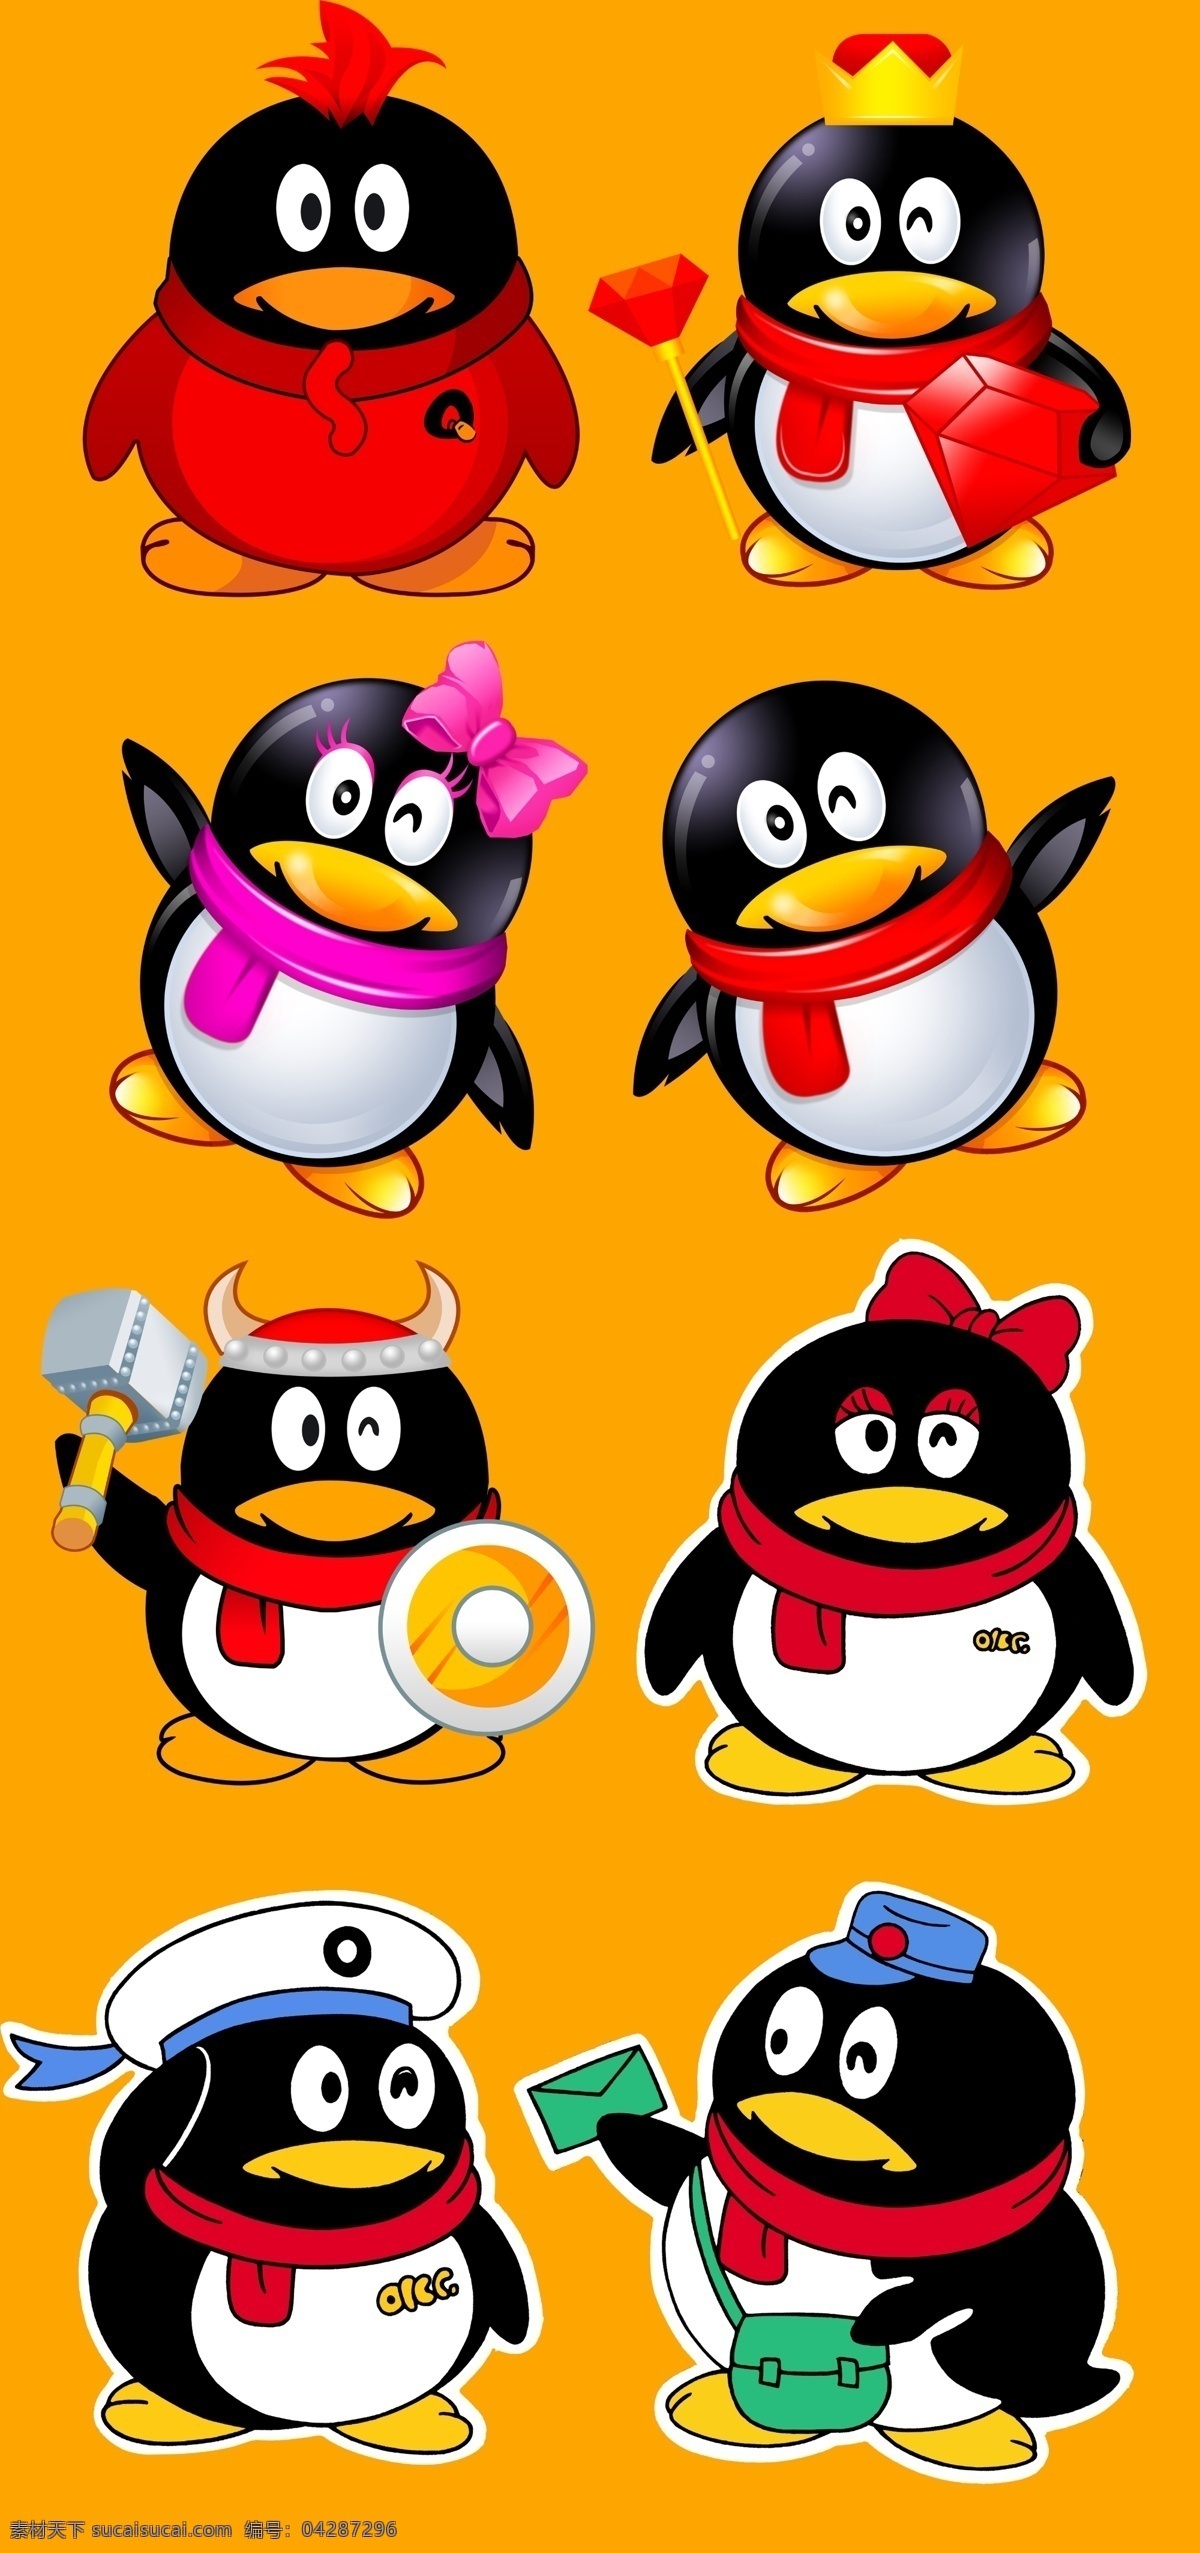 qq图标 qq 图标 企鹅 logo 形象 卡通 表情